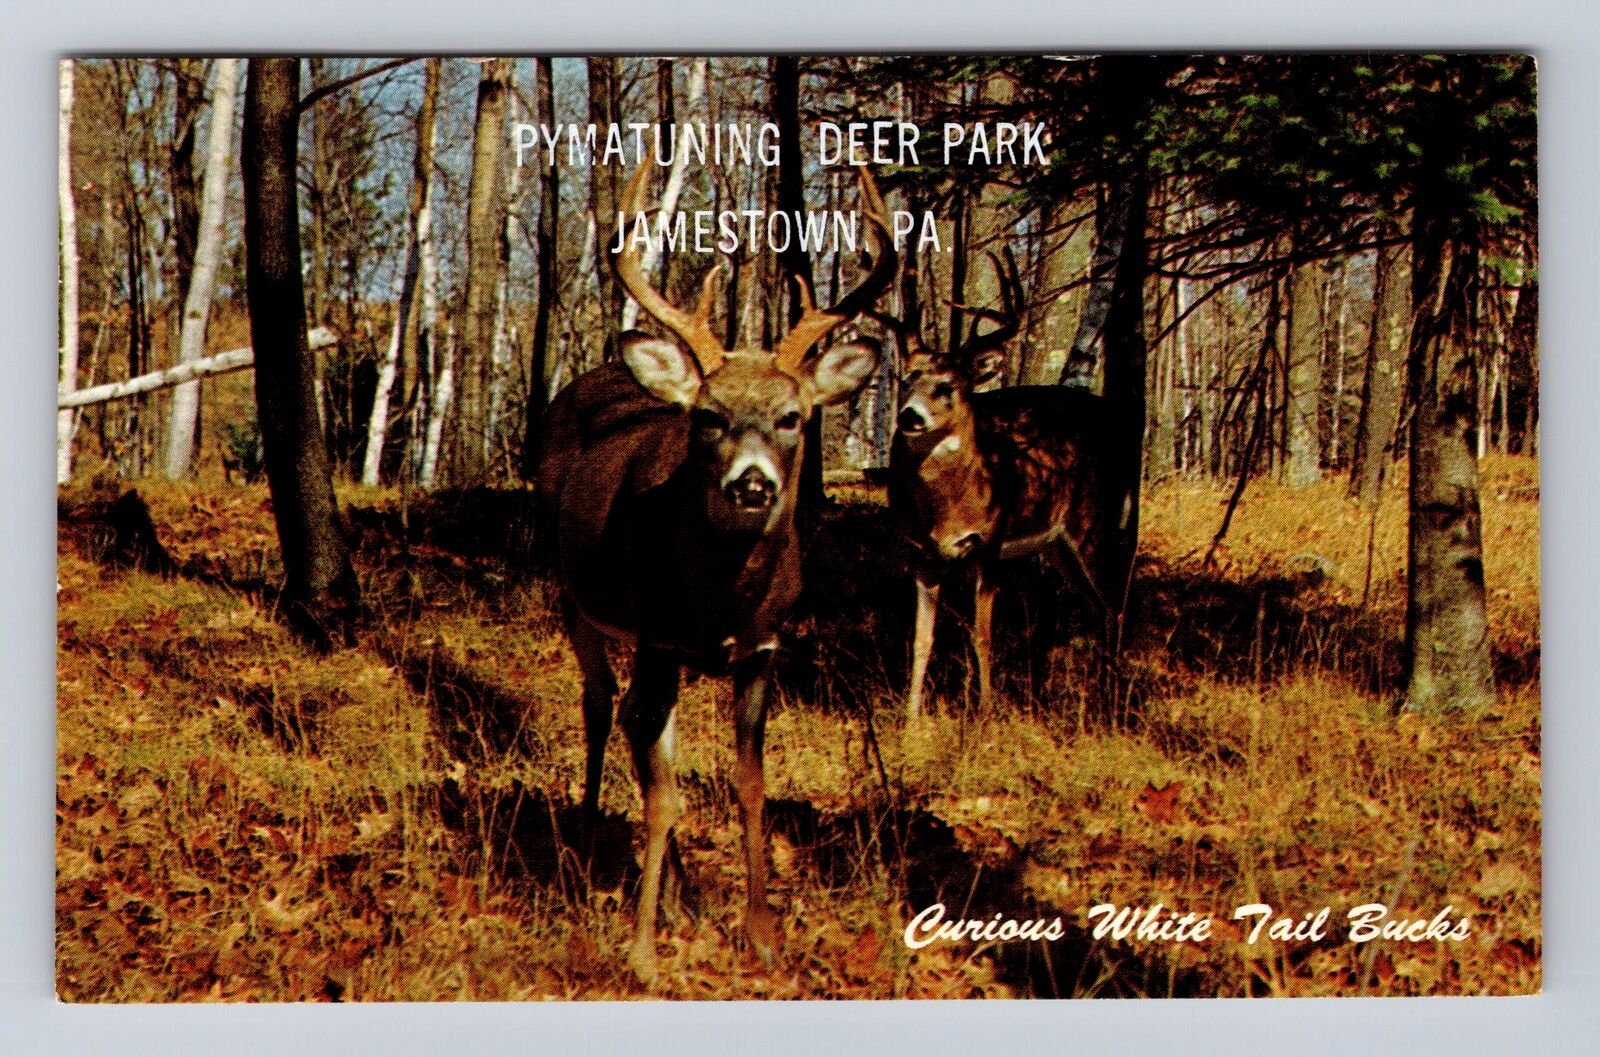 Jamestown PA-Pennsylvania, Pymatuning Deer Park, Antique, Vintage Postcard